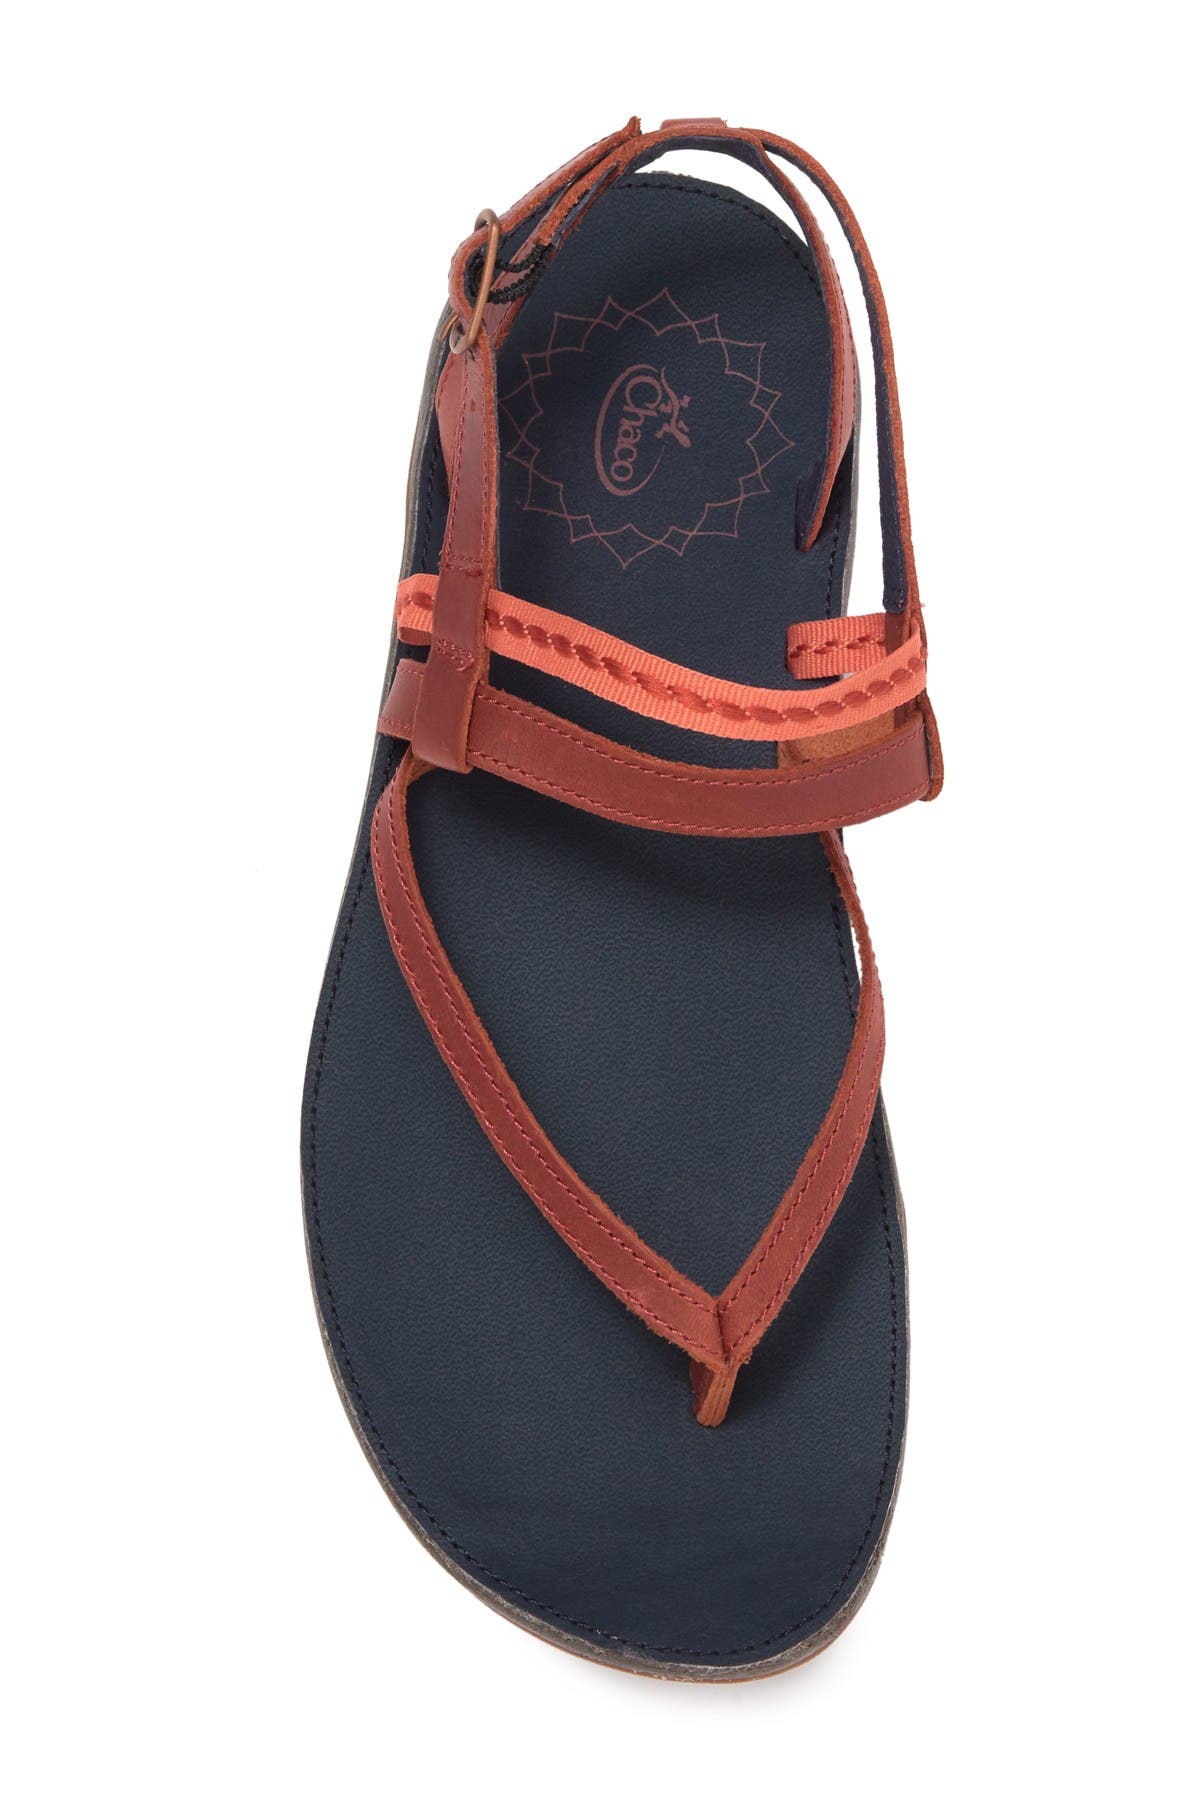 chaco loveland leather sandal